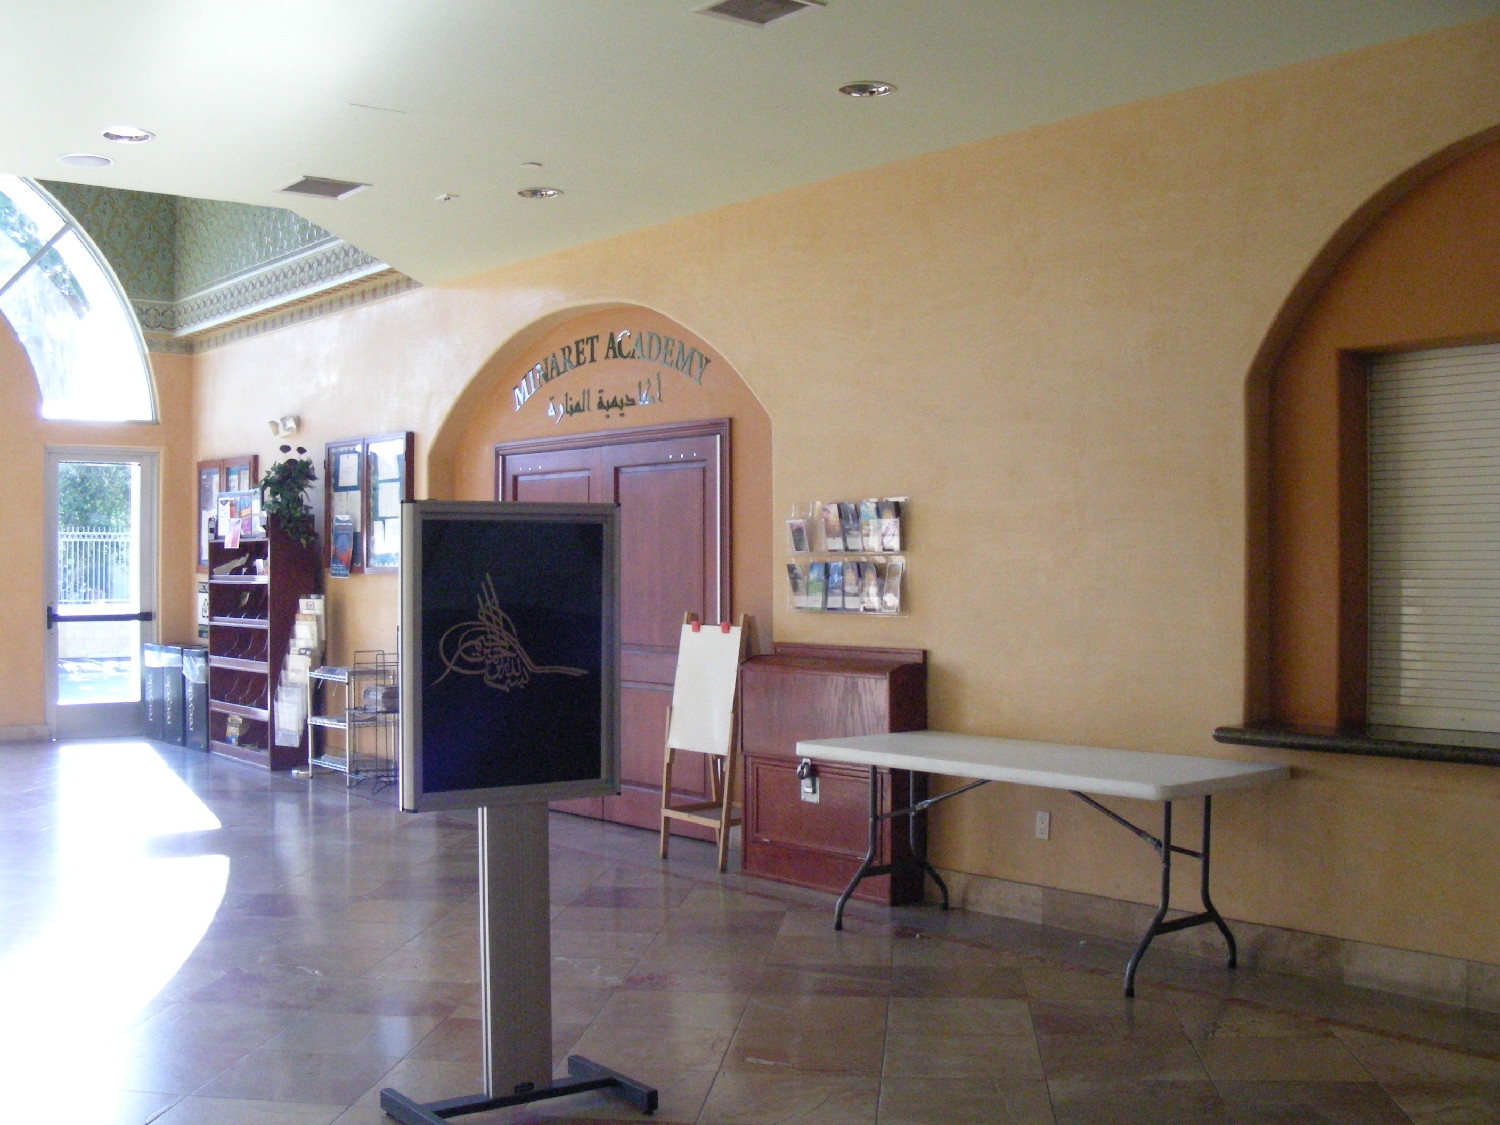 Entrance hall, with doorway to Minaret Academy